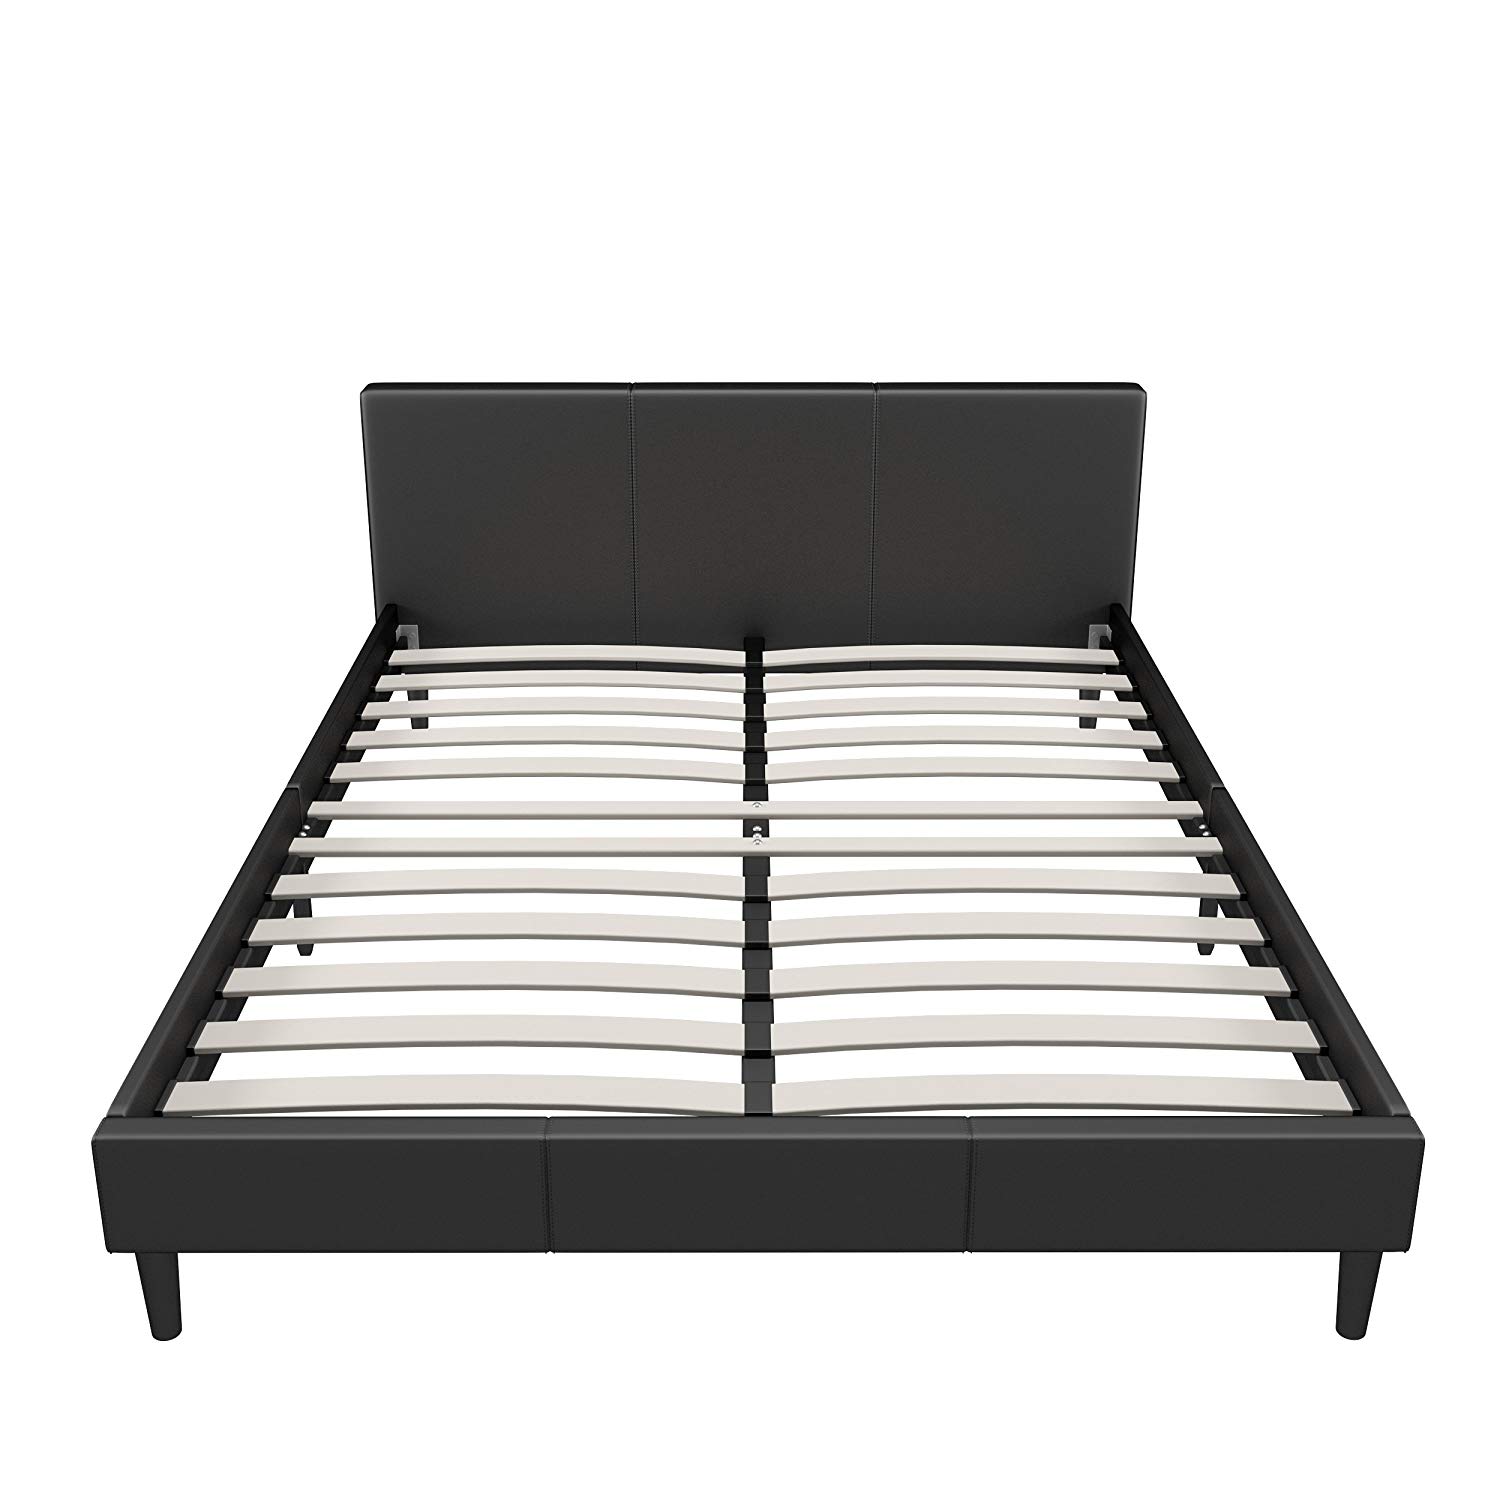 Bed frame amazon.com: manhattan queen-size bed frame |  Modern style flat headboard QQITXCF